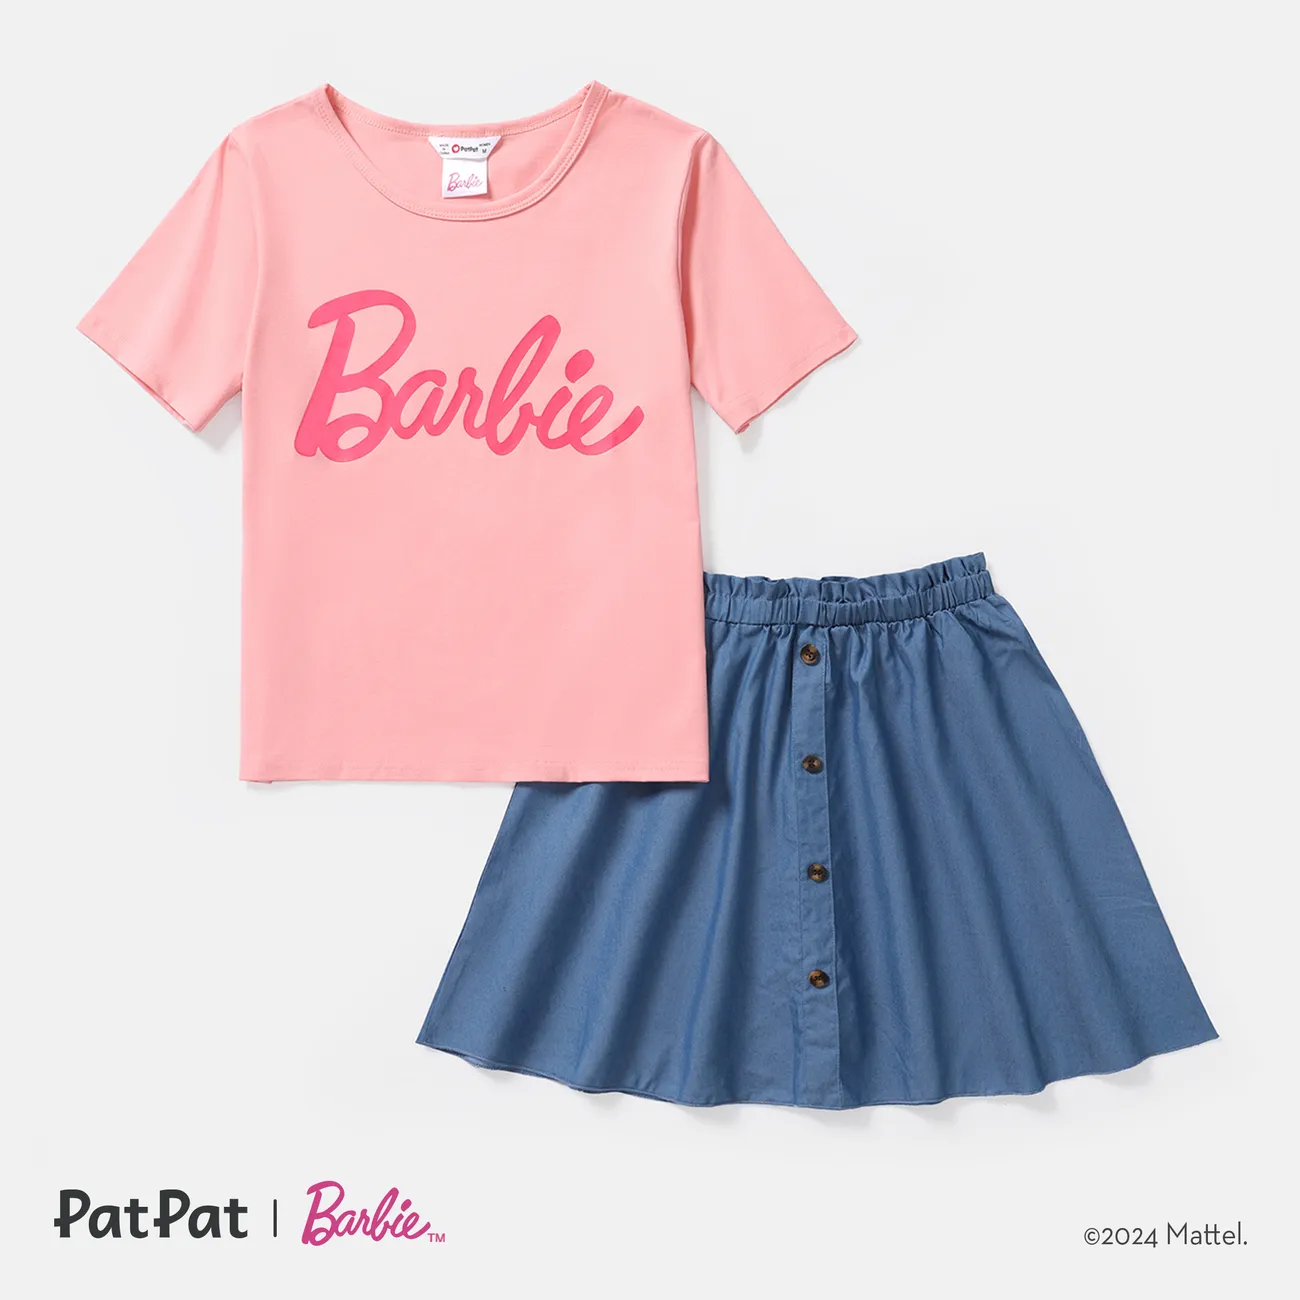 Barbie Mommy and Me Short-sleeve Letter Print Tee and Imitation Denim Skirt Sets Pink big image 1